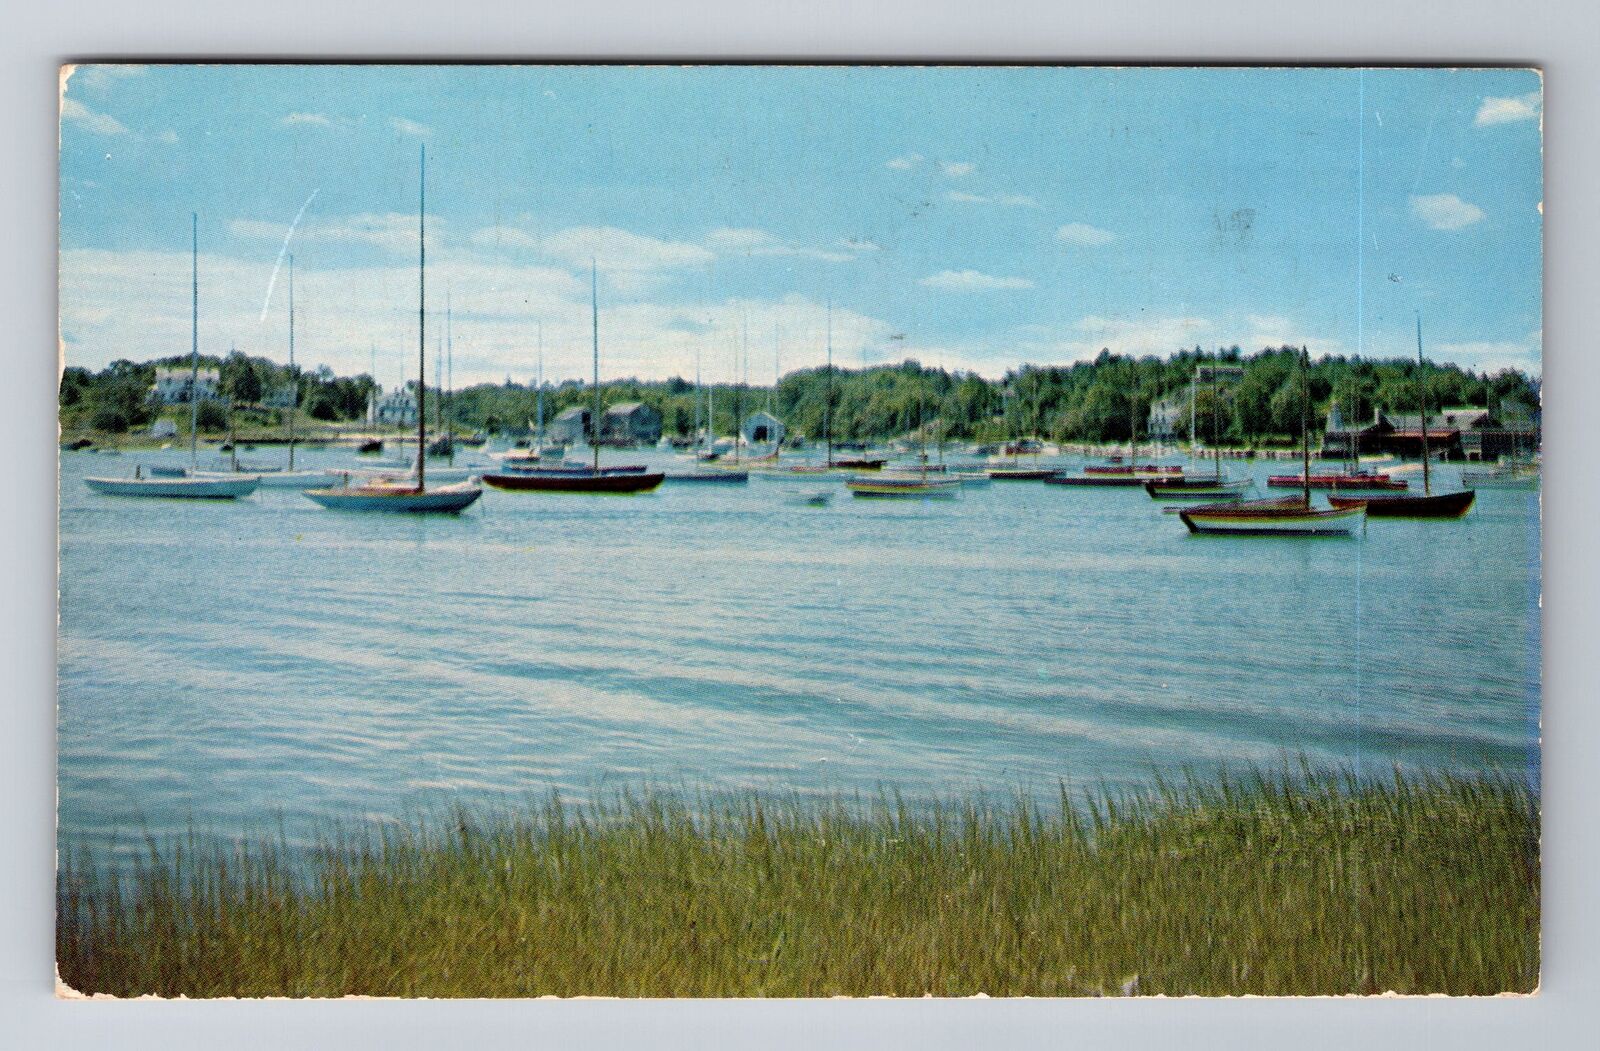 Cohasset MA-Massachusetts, Cohasset Harbor, Antique, Vintage c1956 Postcard